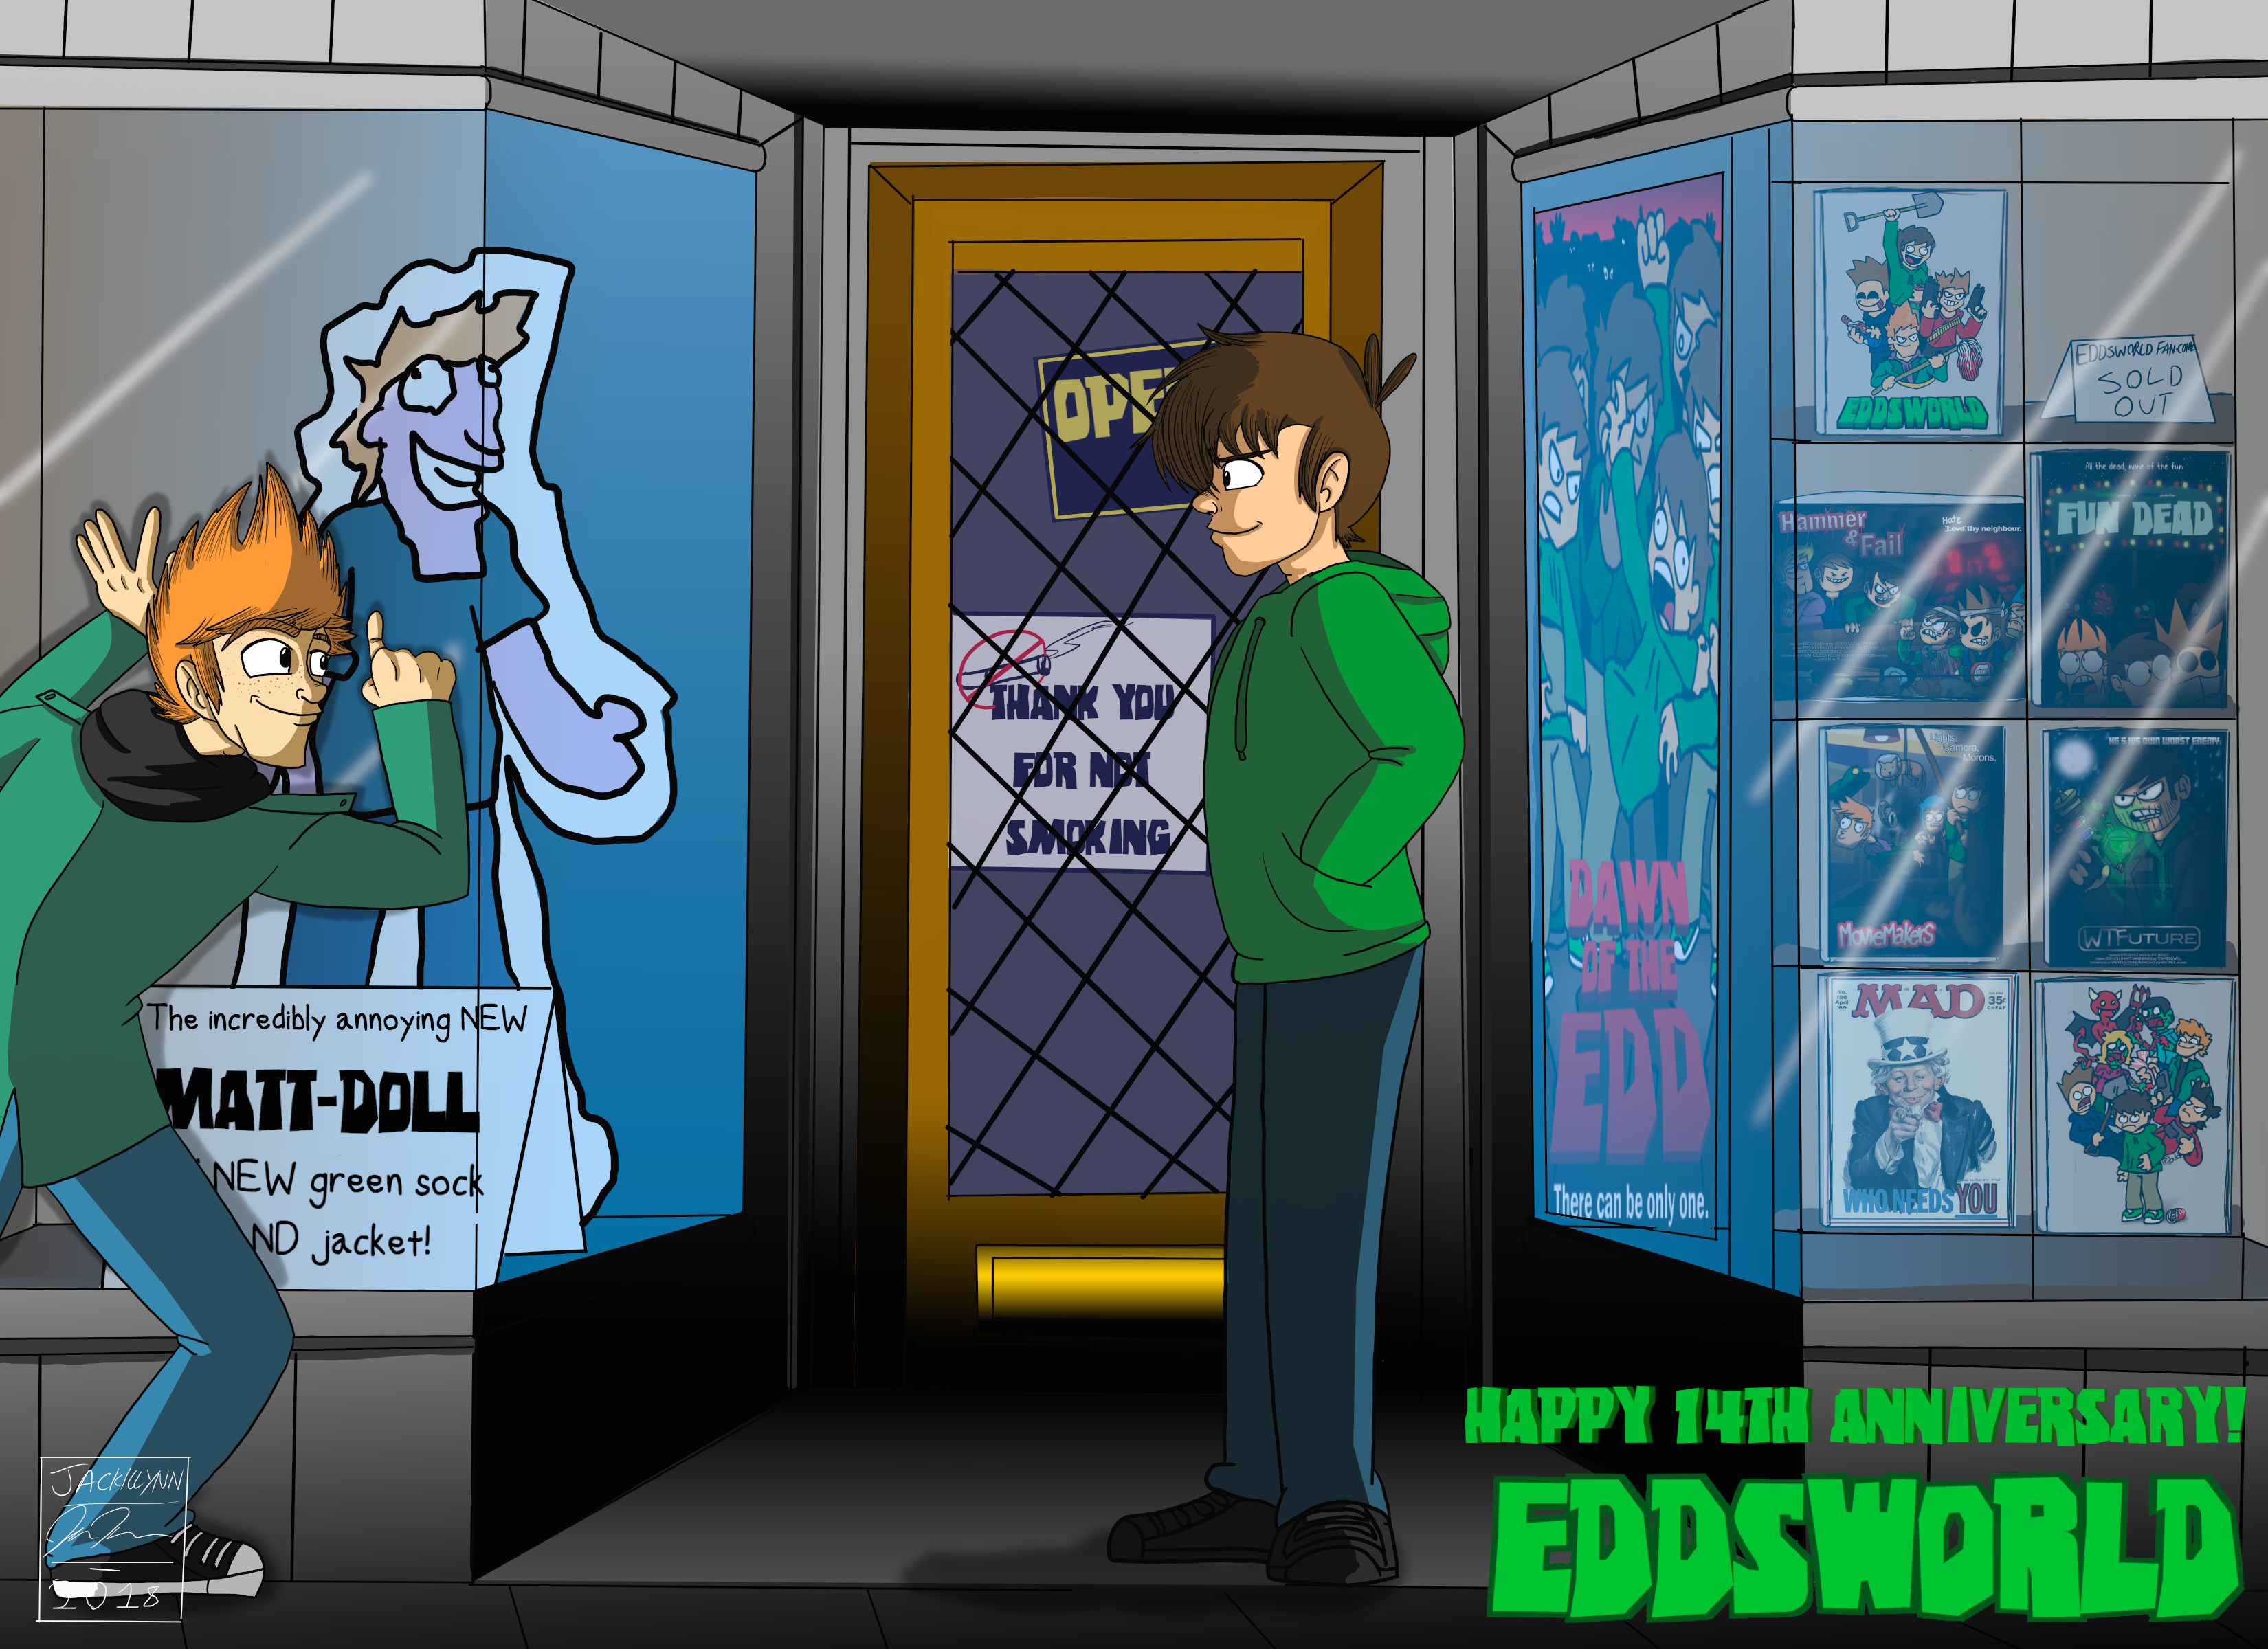 Happy 14th Anniversary Eddsworld by Eddsworld-tbatf on DeviantArt